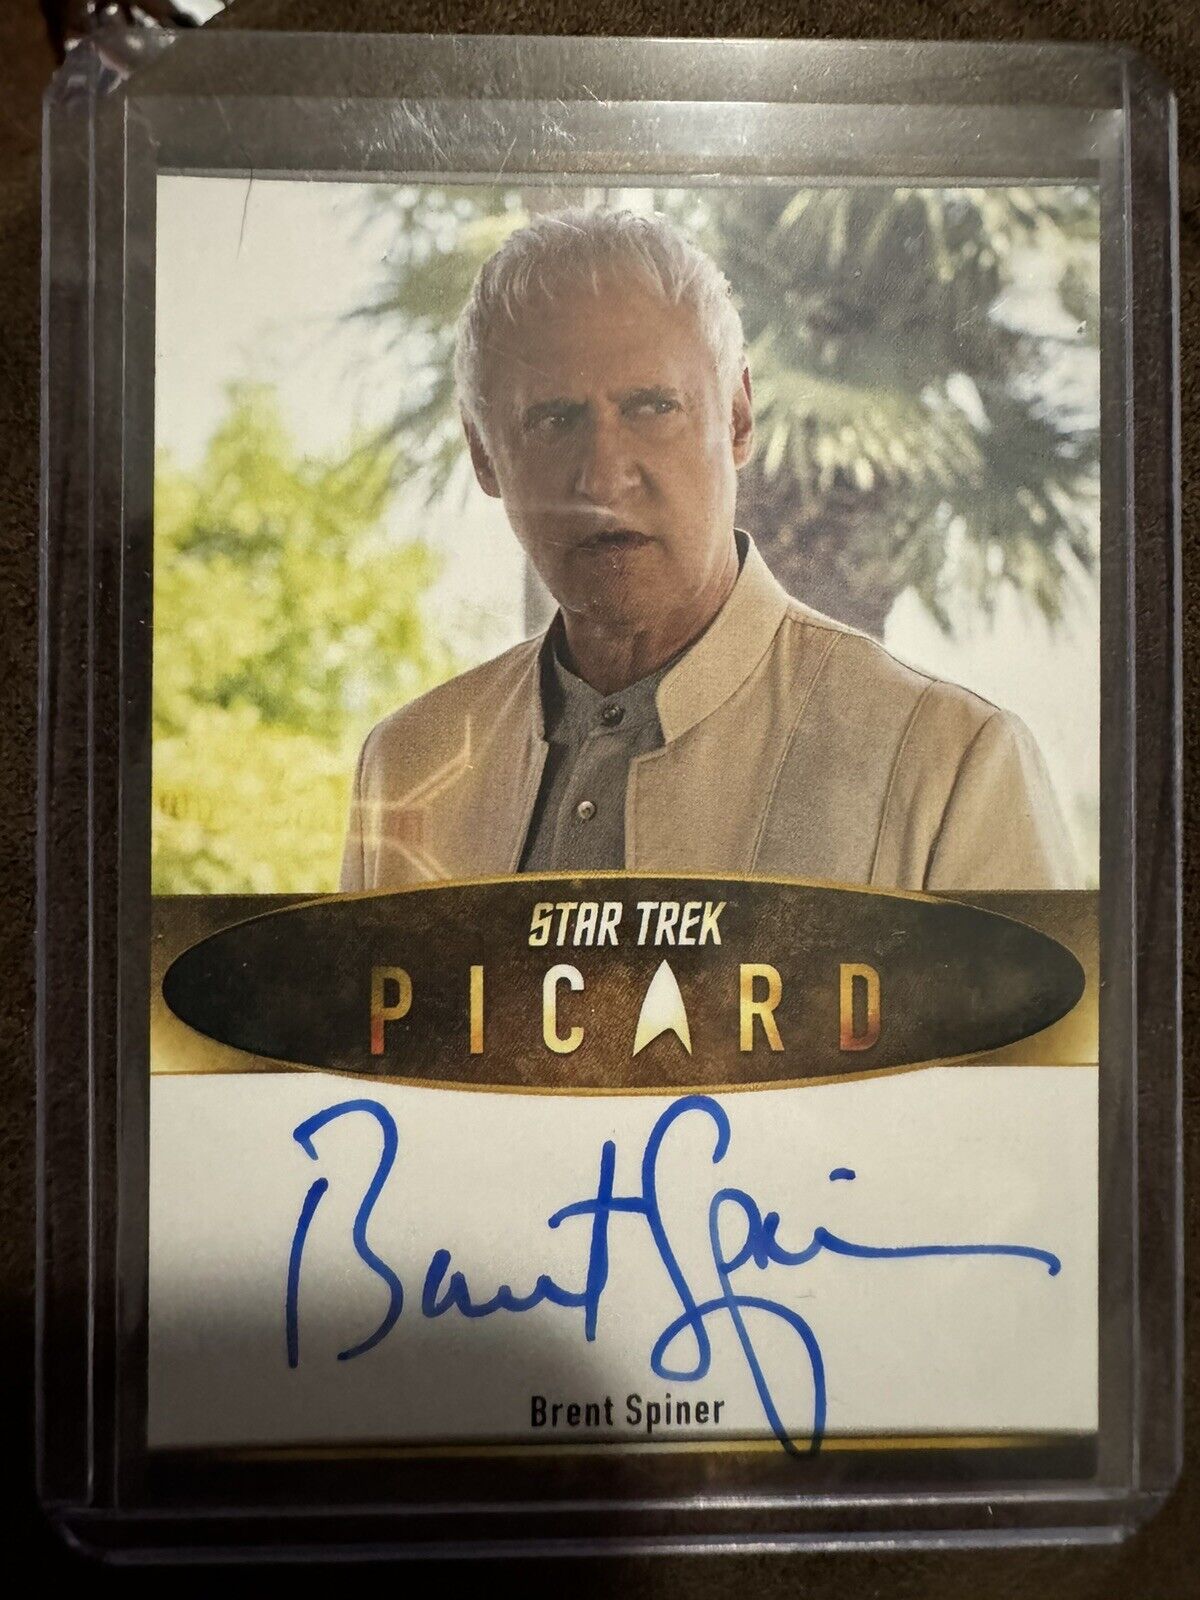 Star Trek Picard Seasons 2 & 3 Brent Spiner Autograph Card SCARCE